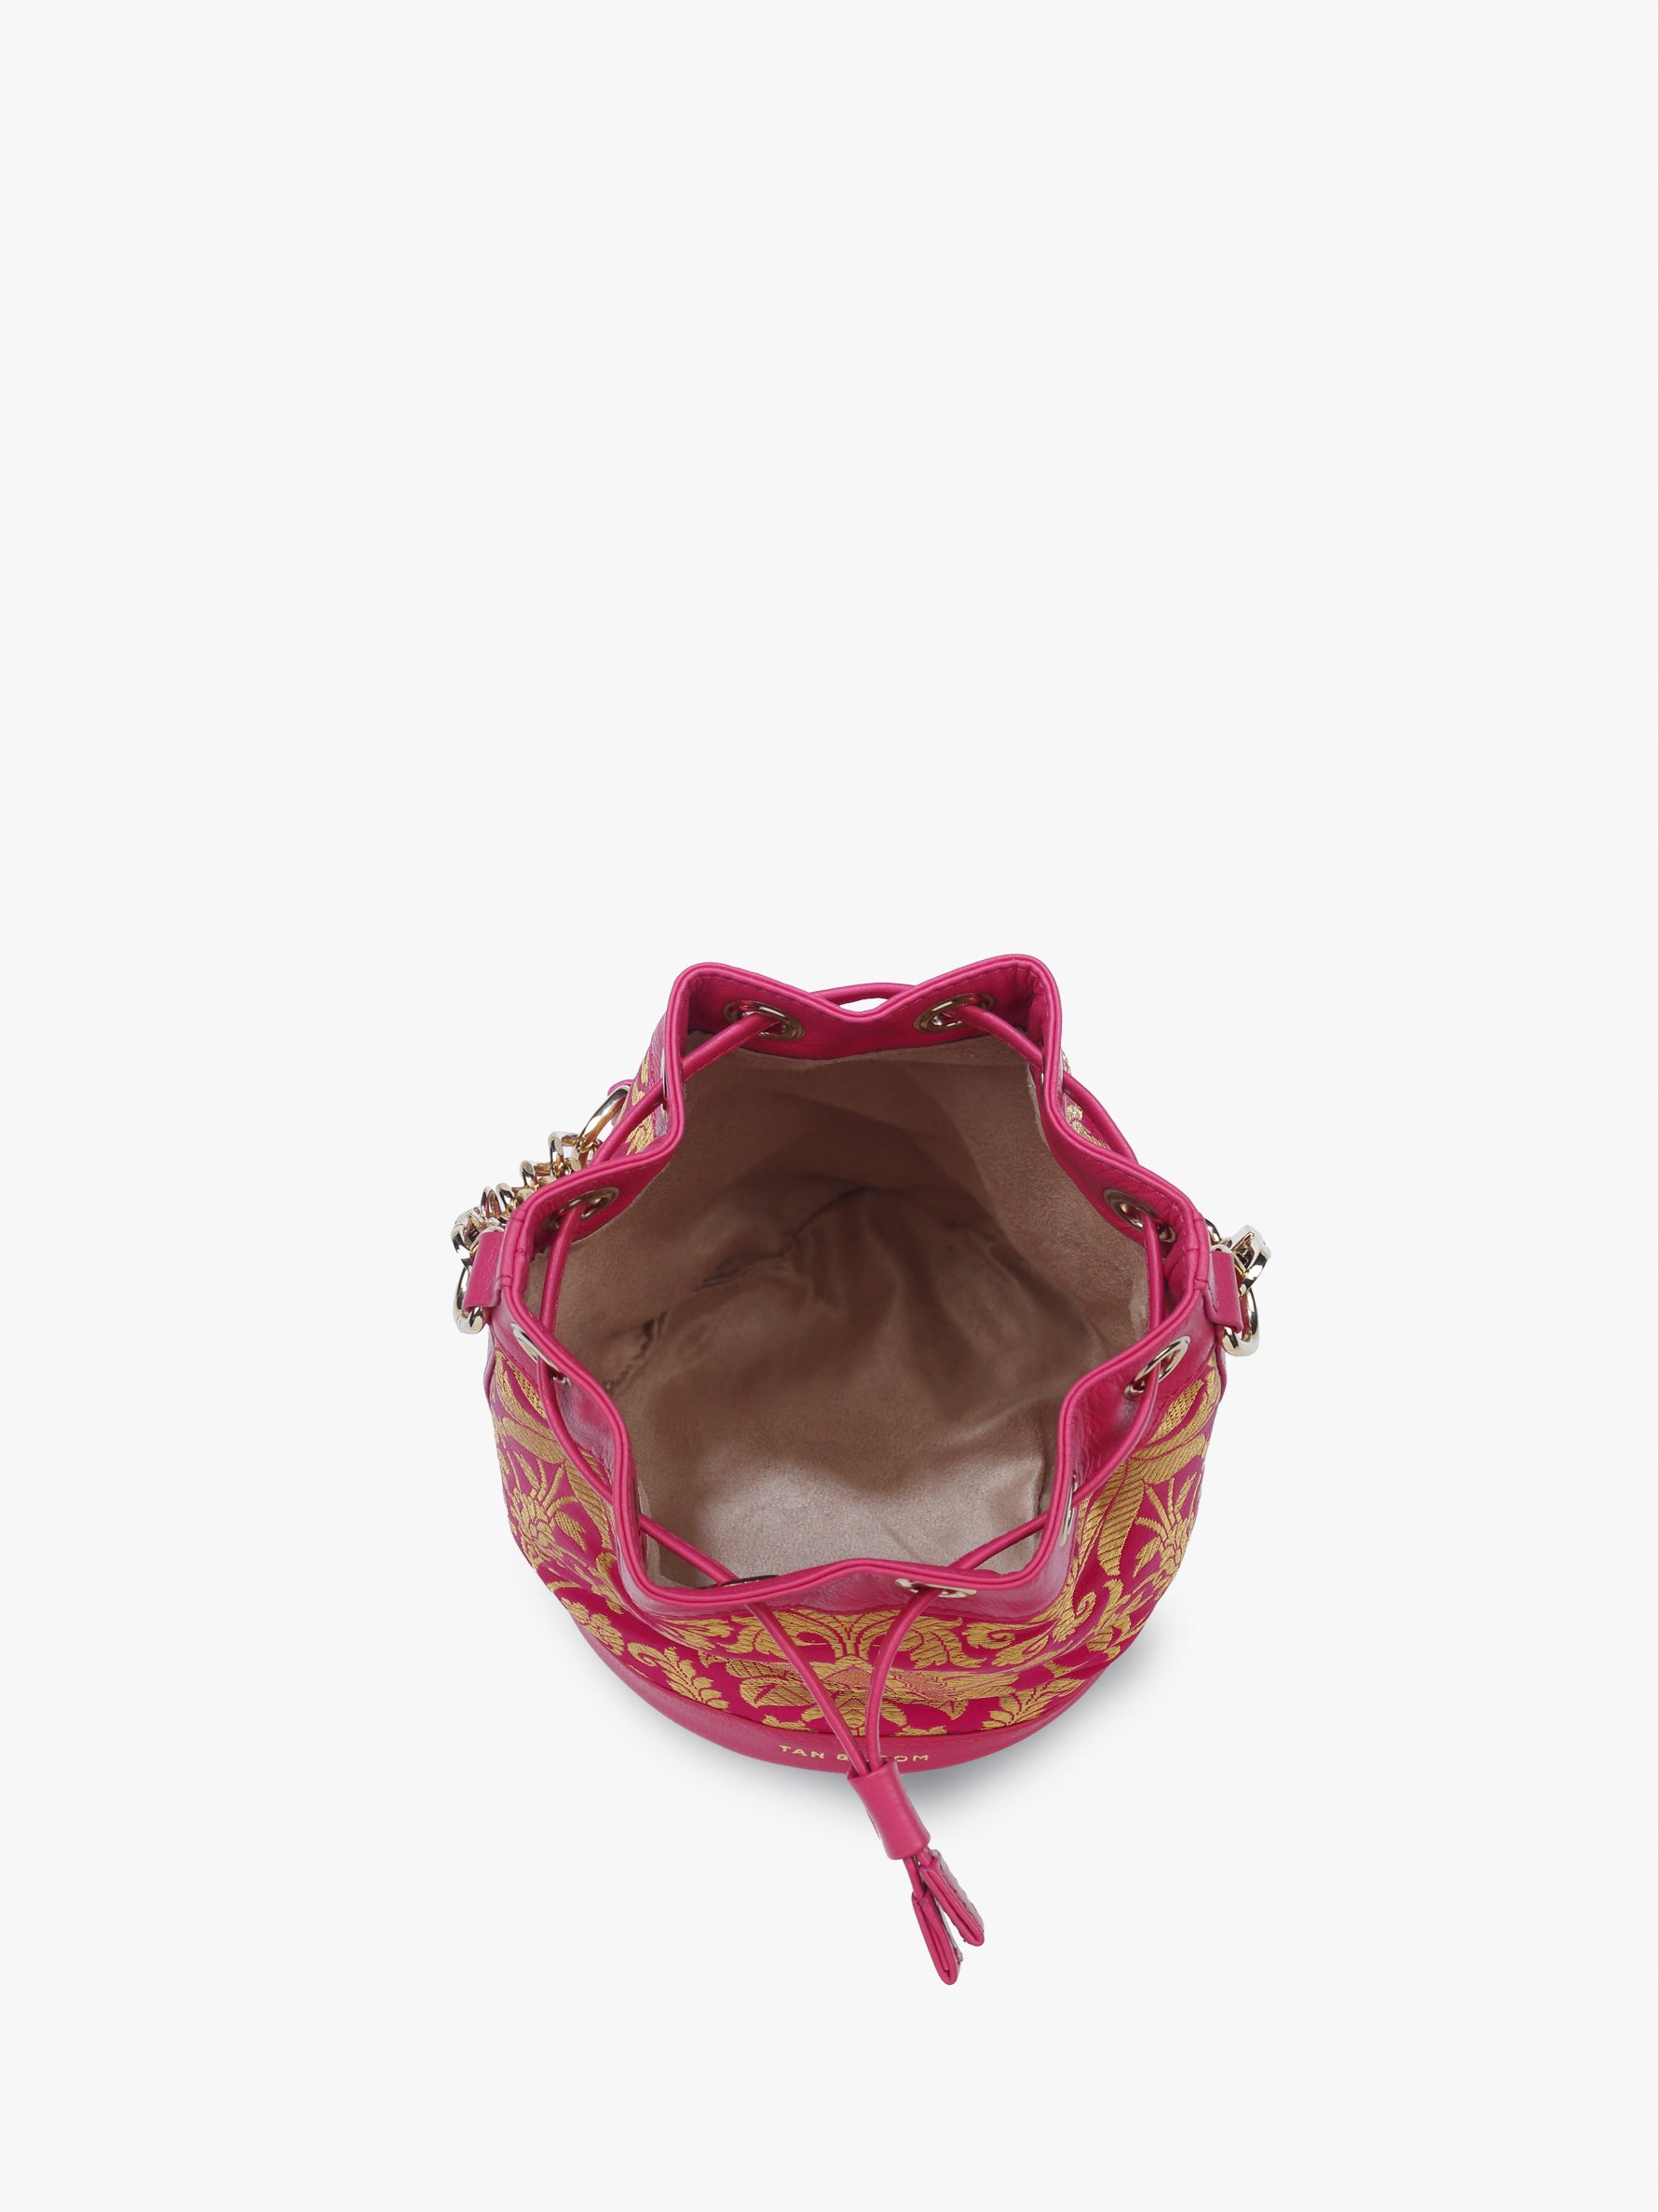 Handcrafted Pink Genuine Leather & Banarasi Brocade Bombay Bucket Bag for Women Tan & Loom